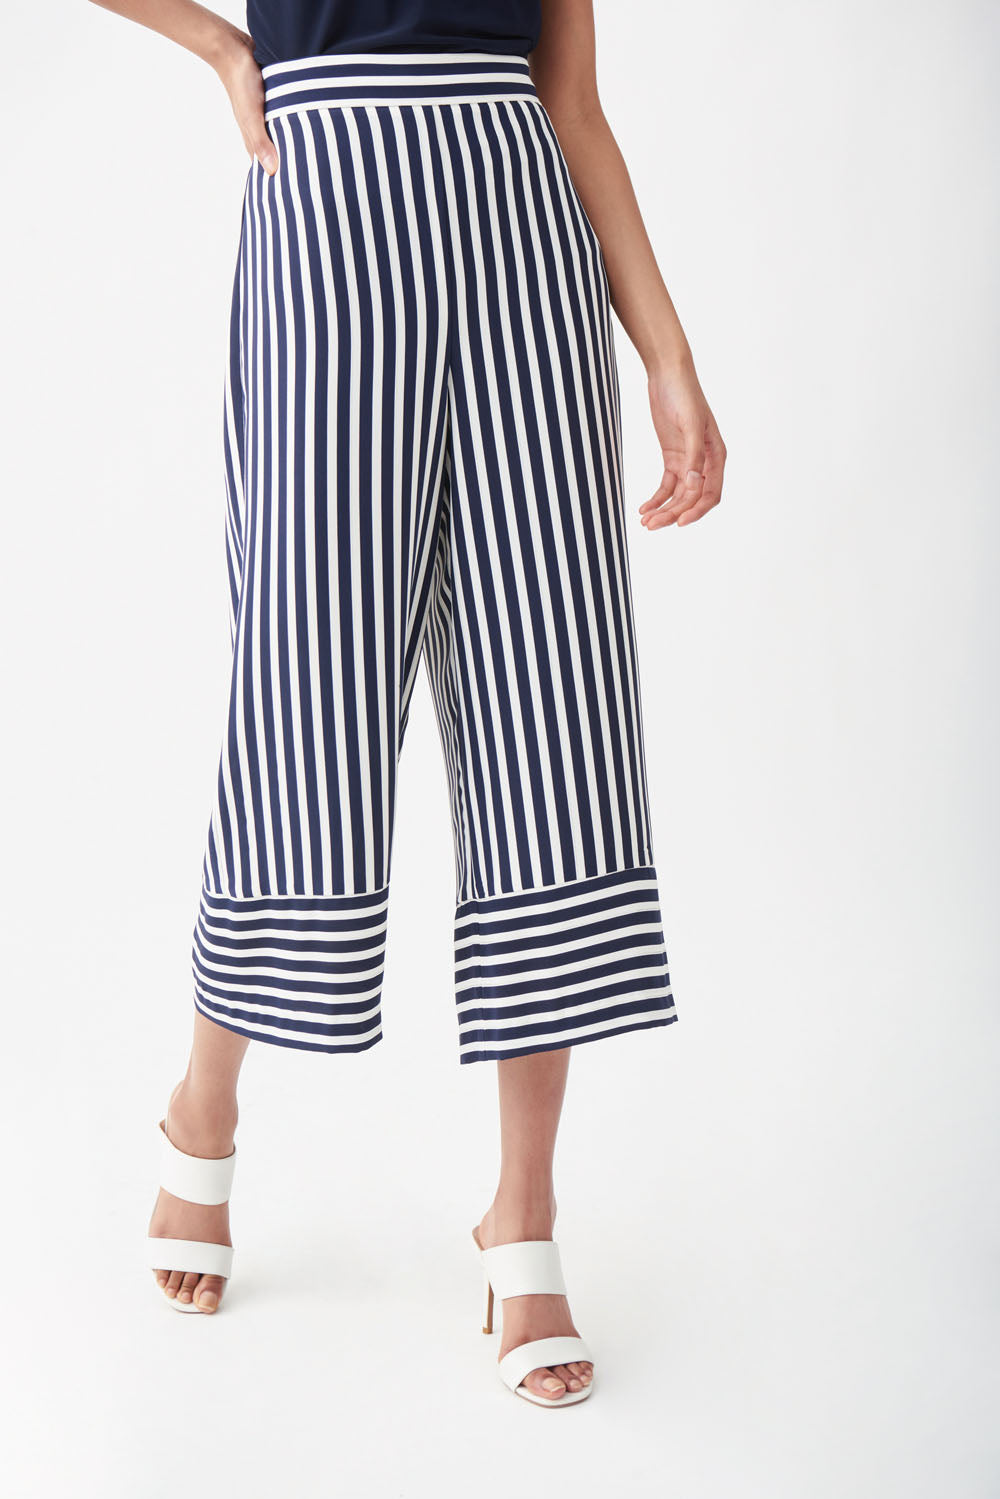 Joseph Ribkoff Midnight Blue-Vanilla Striped Pant Style 221341